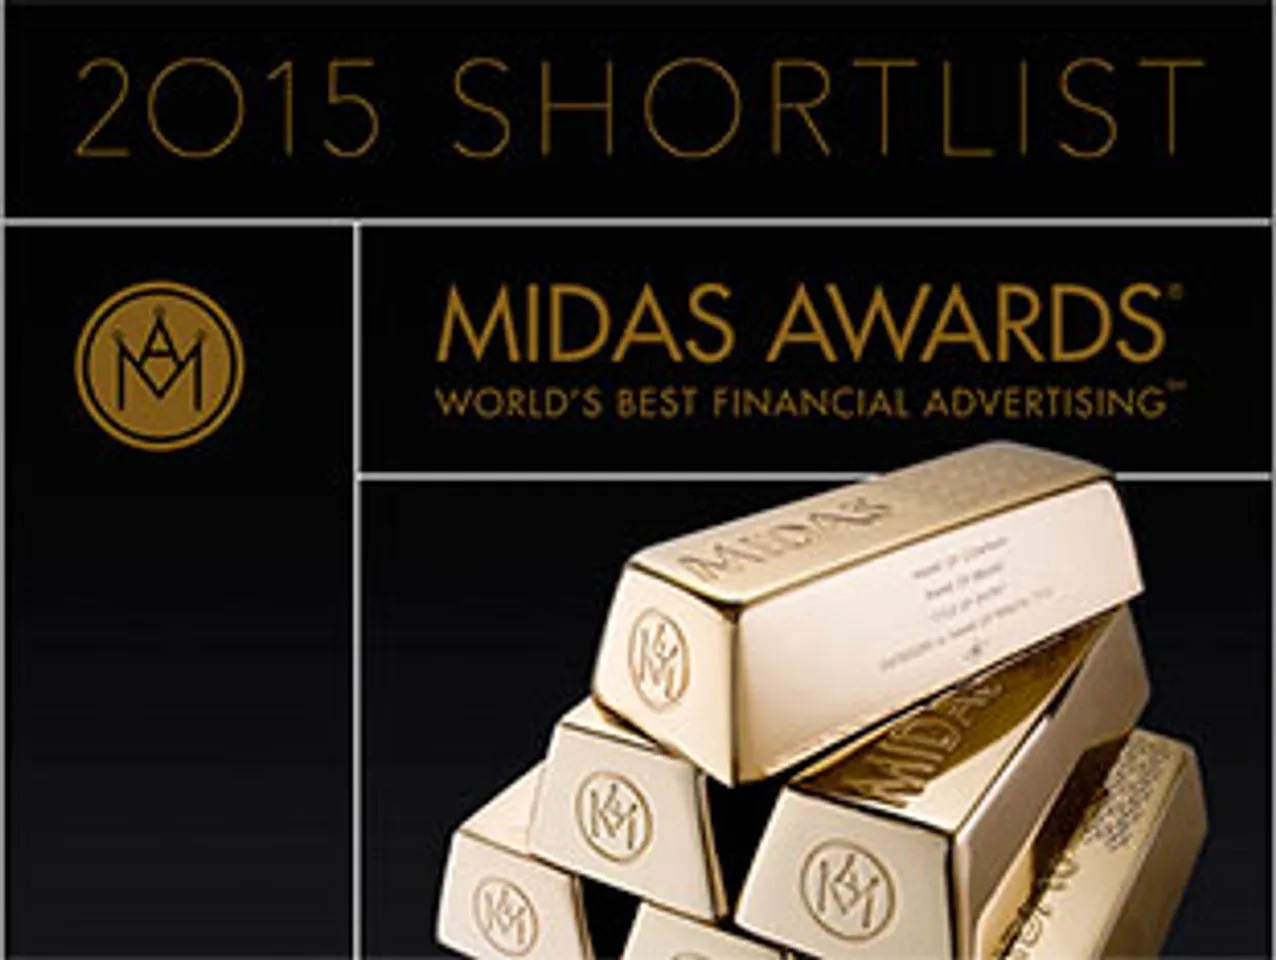 Midas Awards announces 2015 shortlist